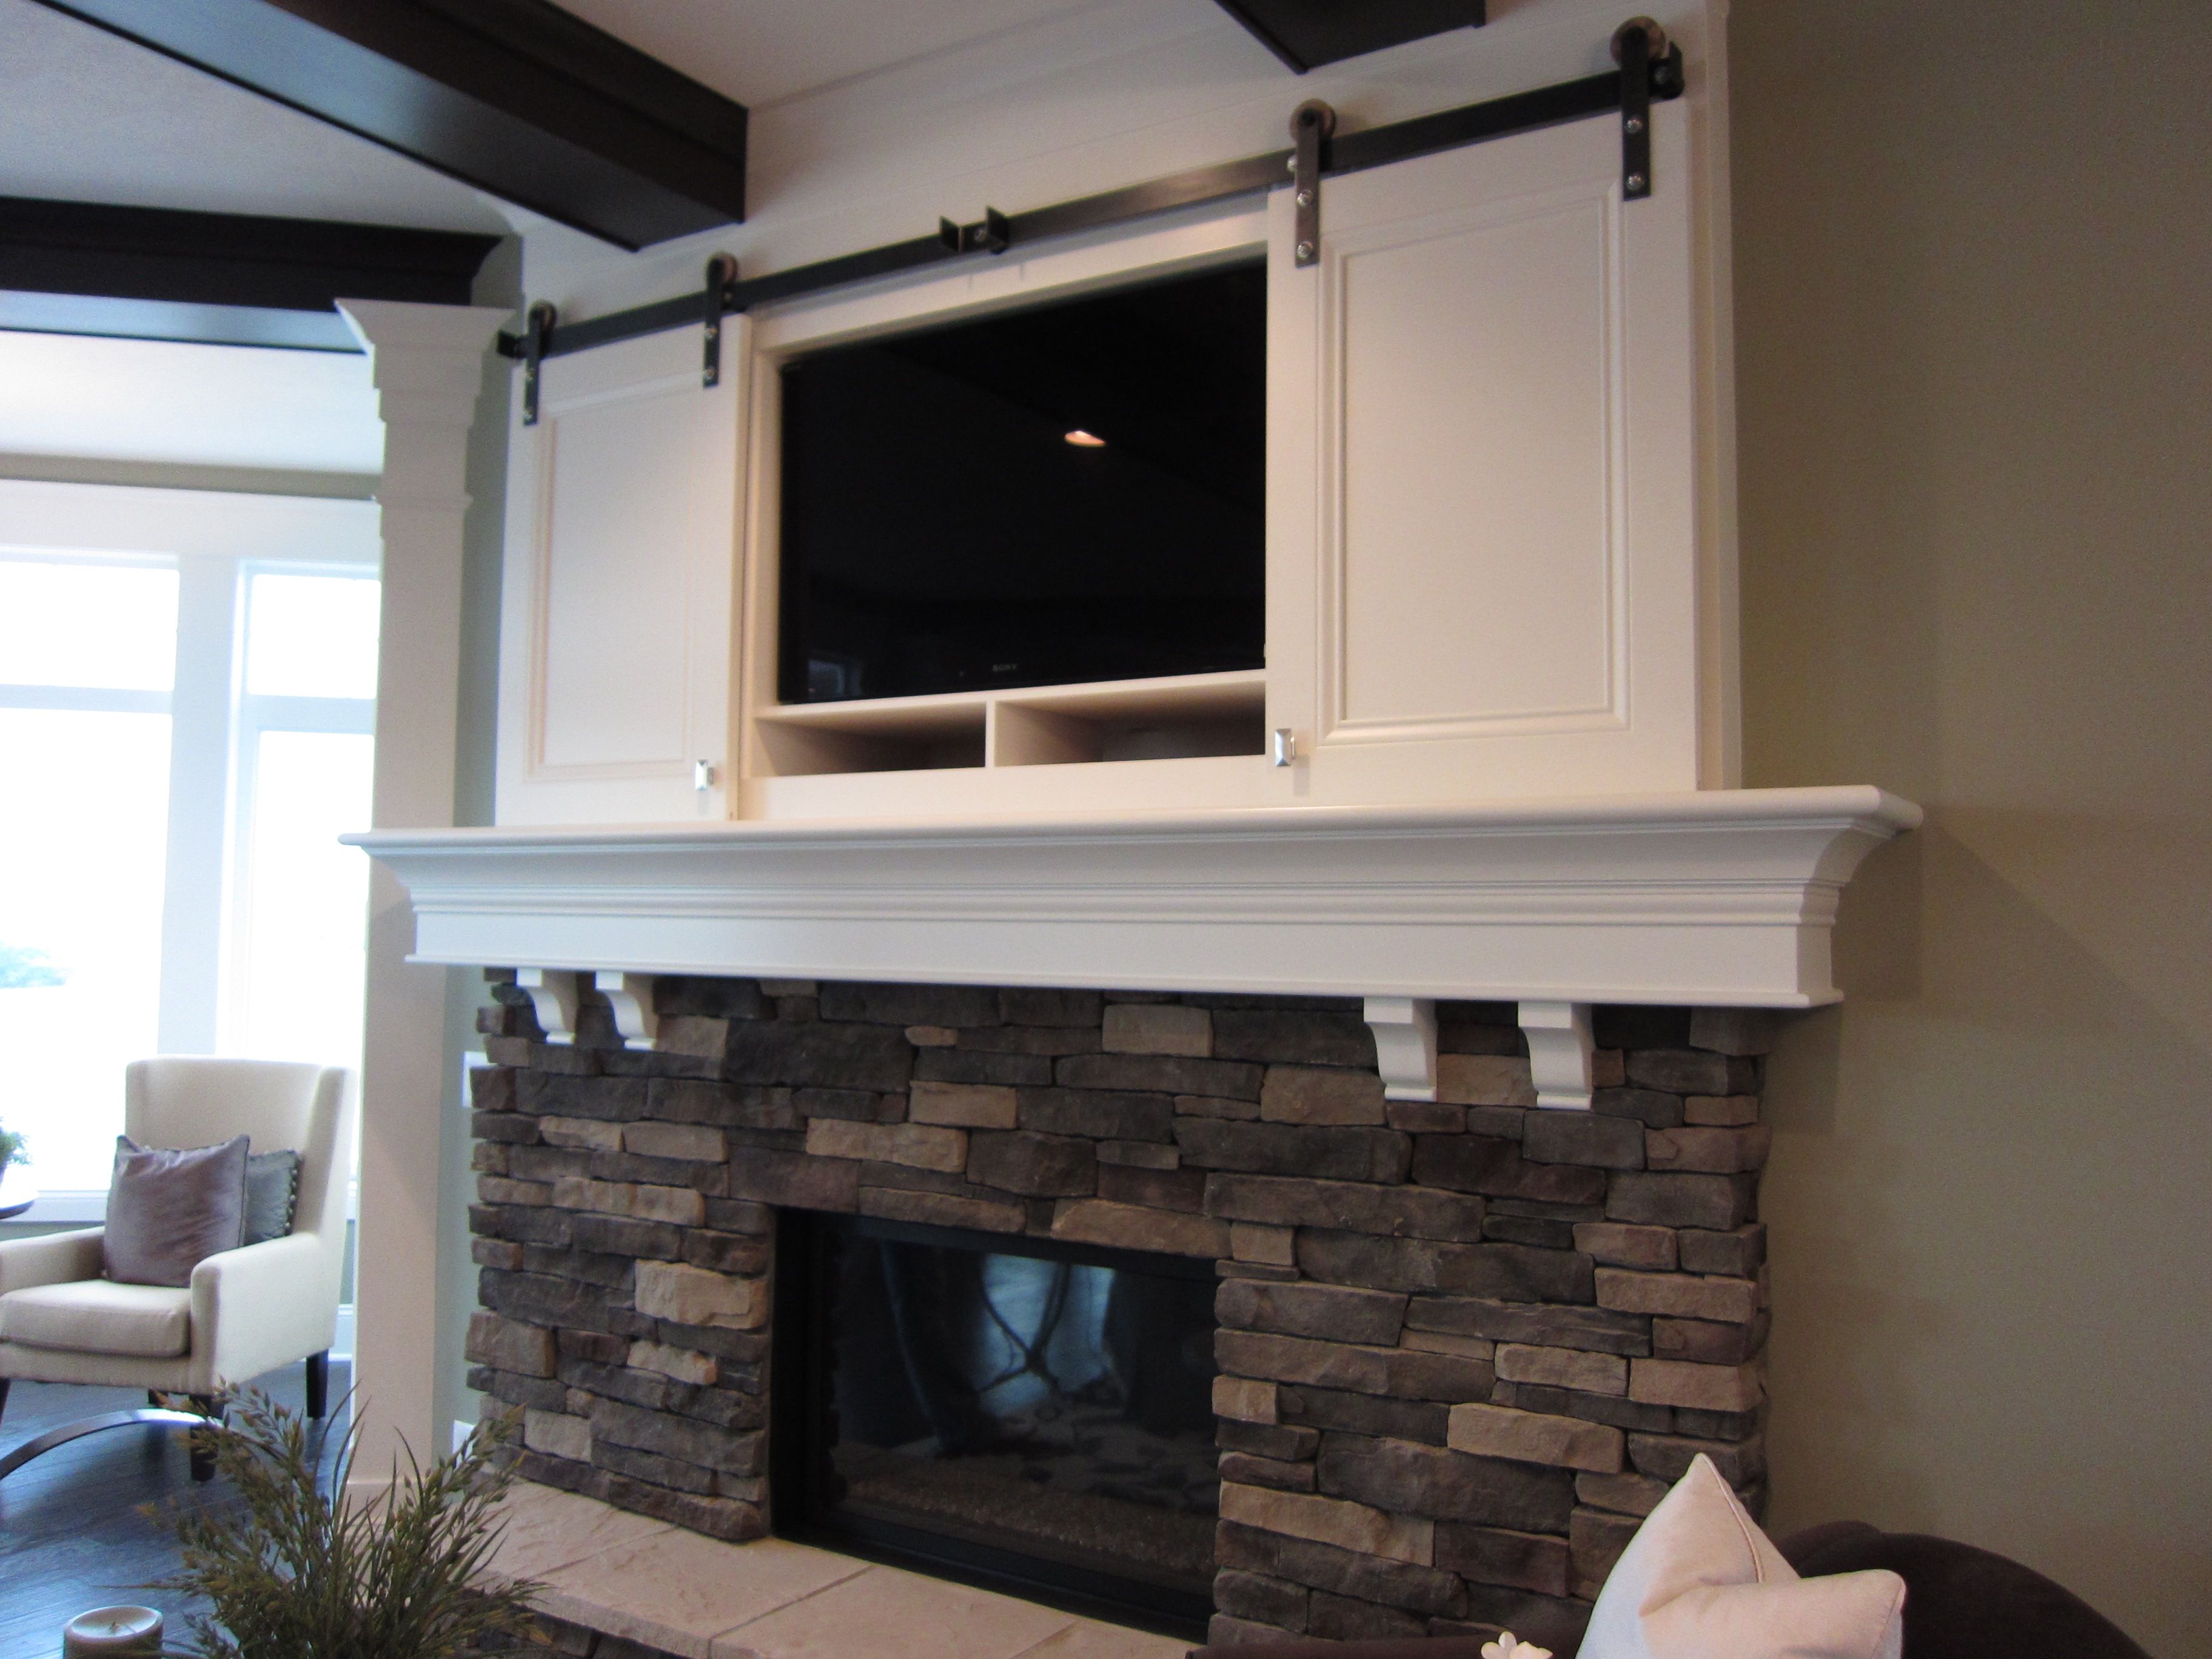 Diy Fireplace Ideas Awesome Fireplace Tv Mantel Ideas Best 25 Tv Above Fireplace Ideas